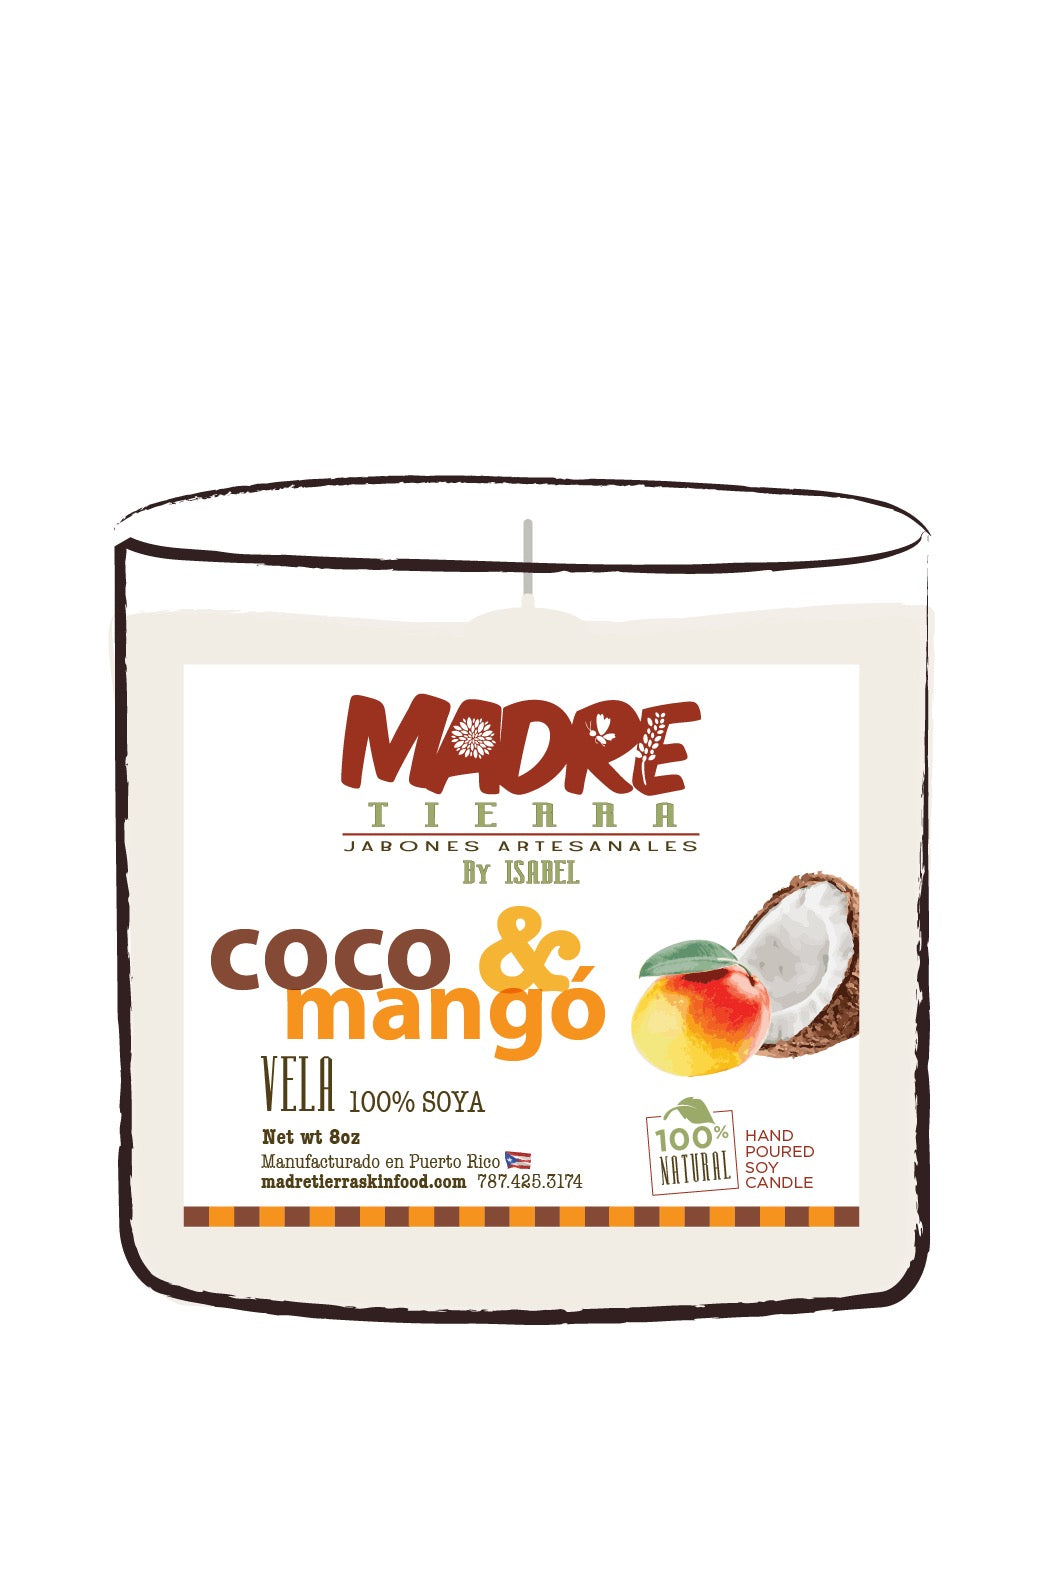 Coco & Mangó vela